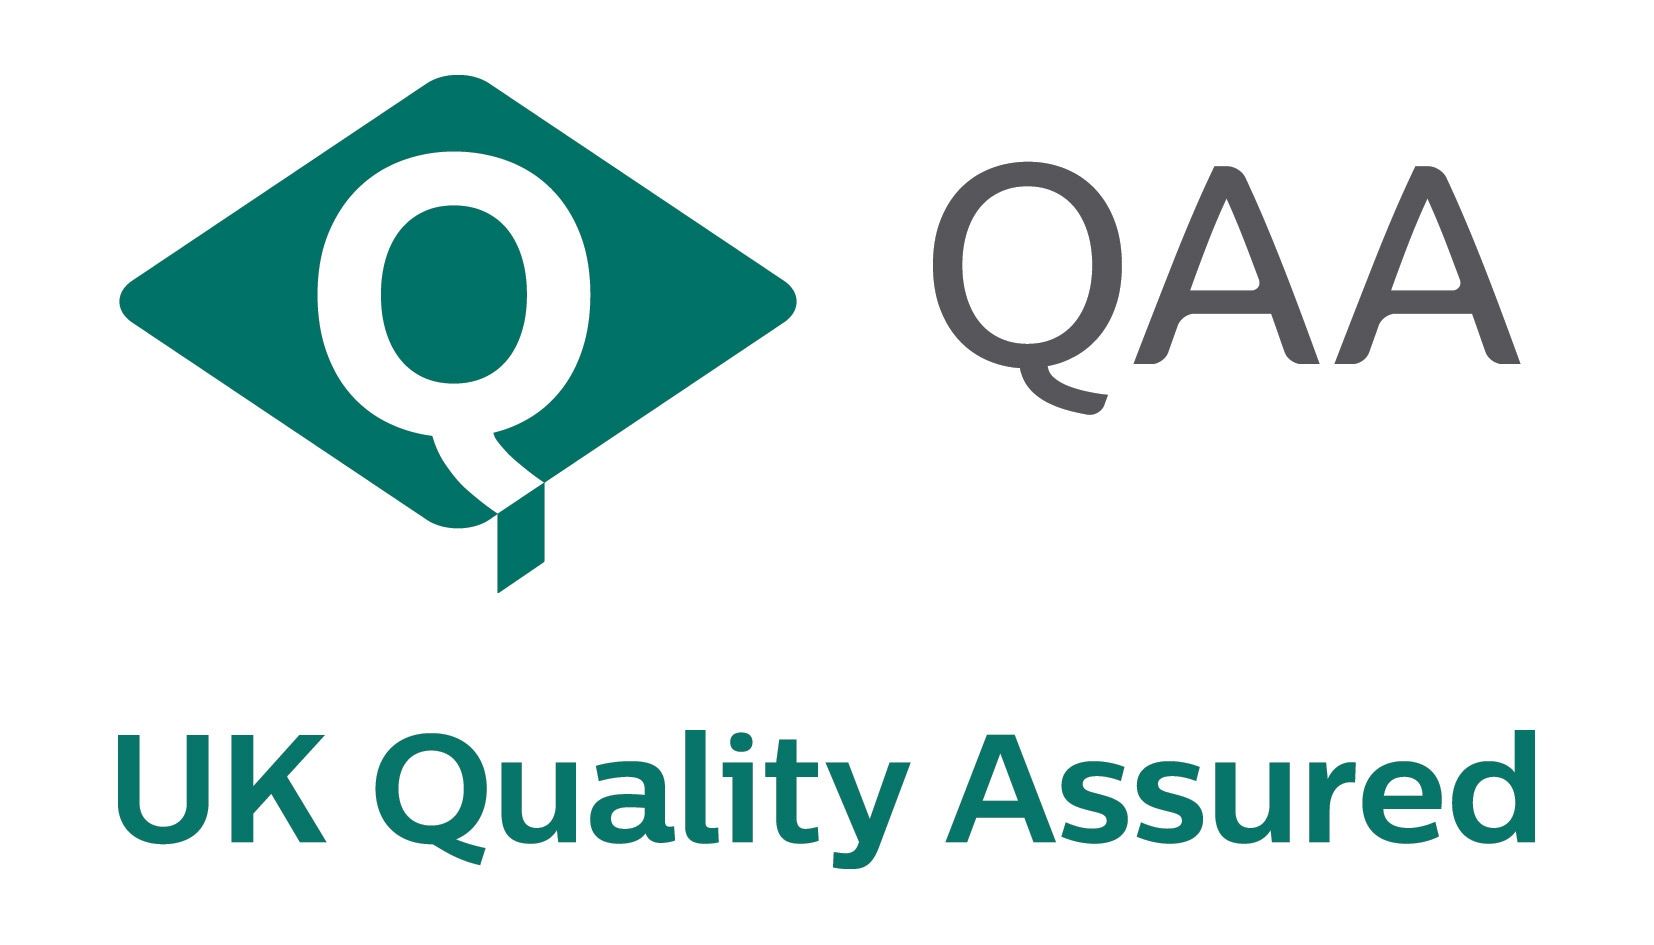 UK Quality Assured logo